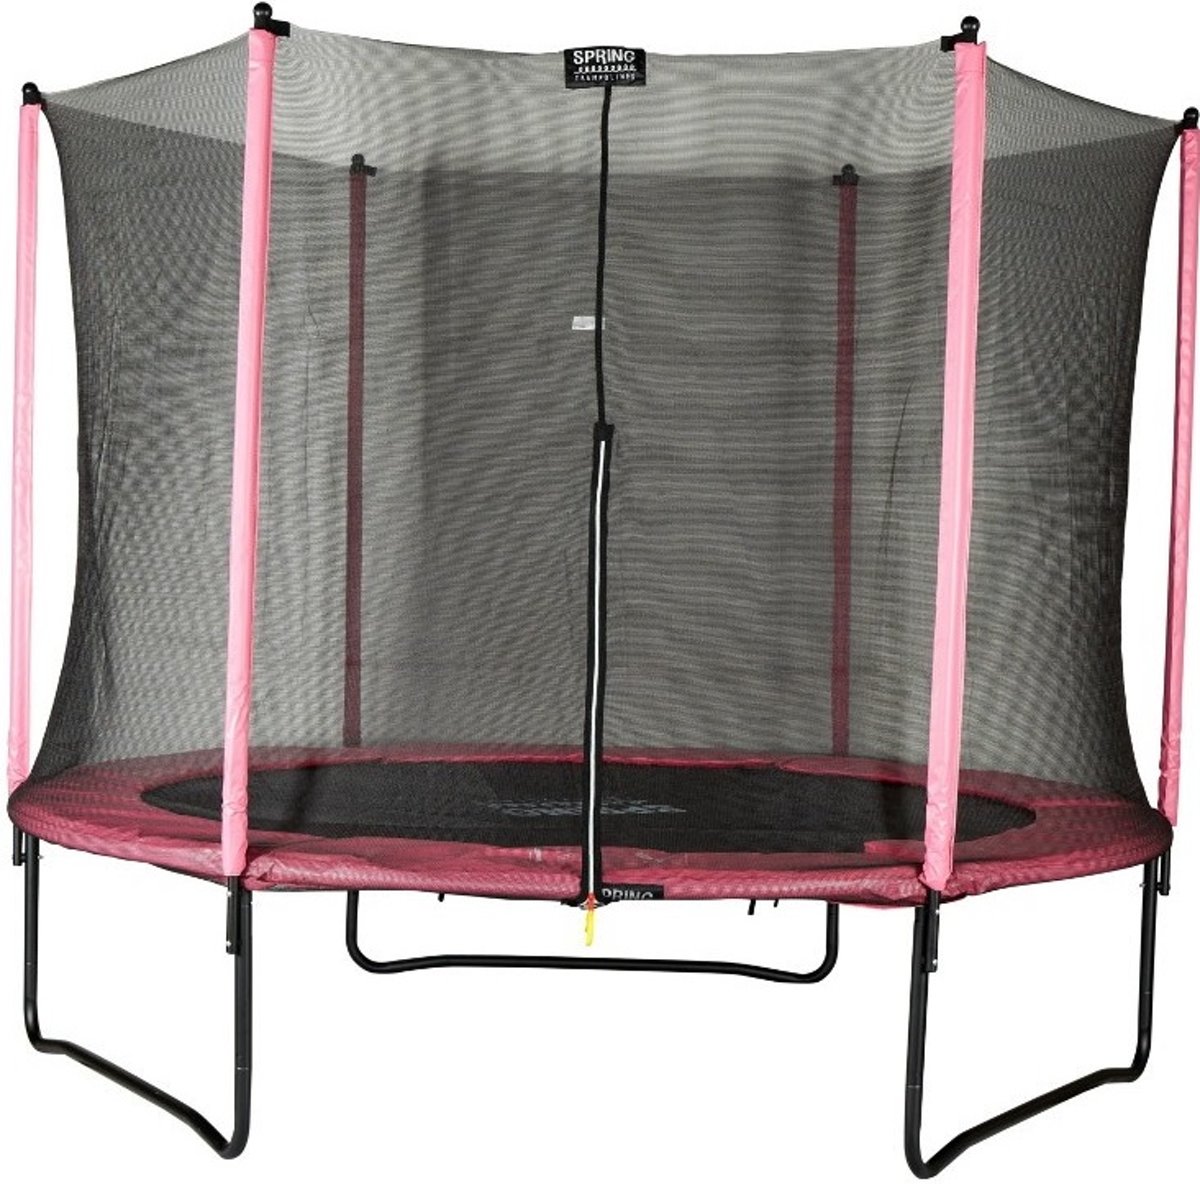 Spring Trampoline 244 cm (8ft) met veiligheidsnet - Black Edition - roze rand